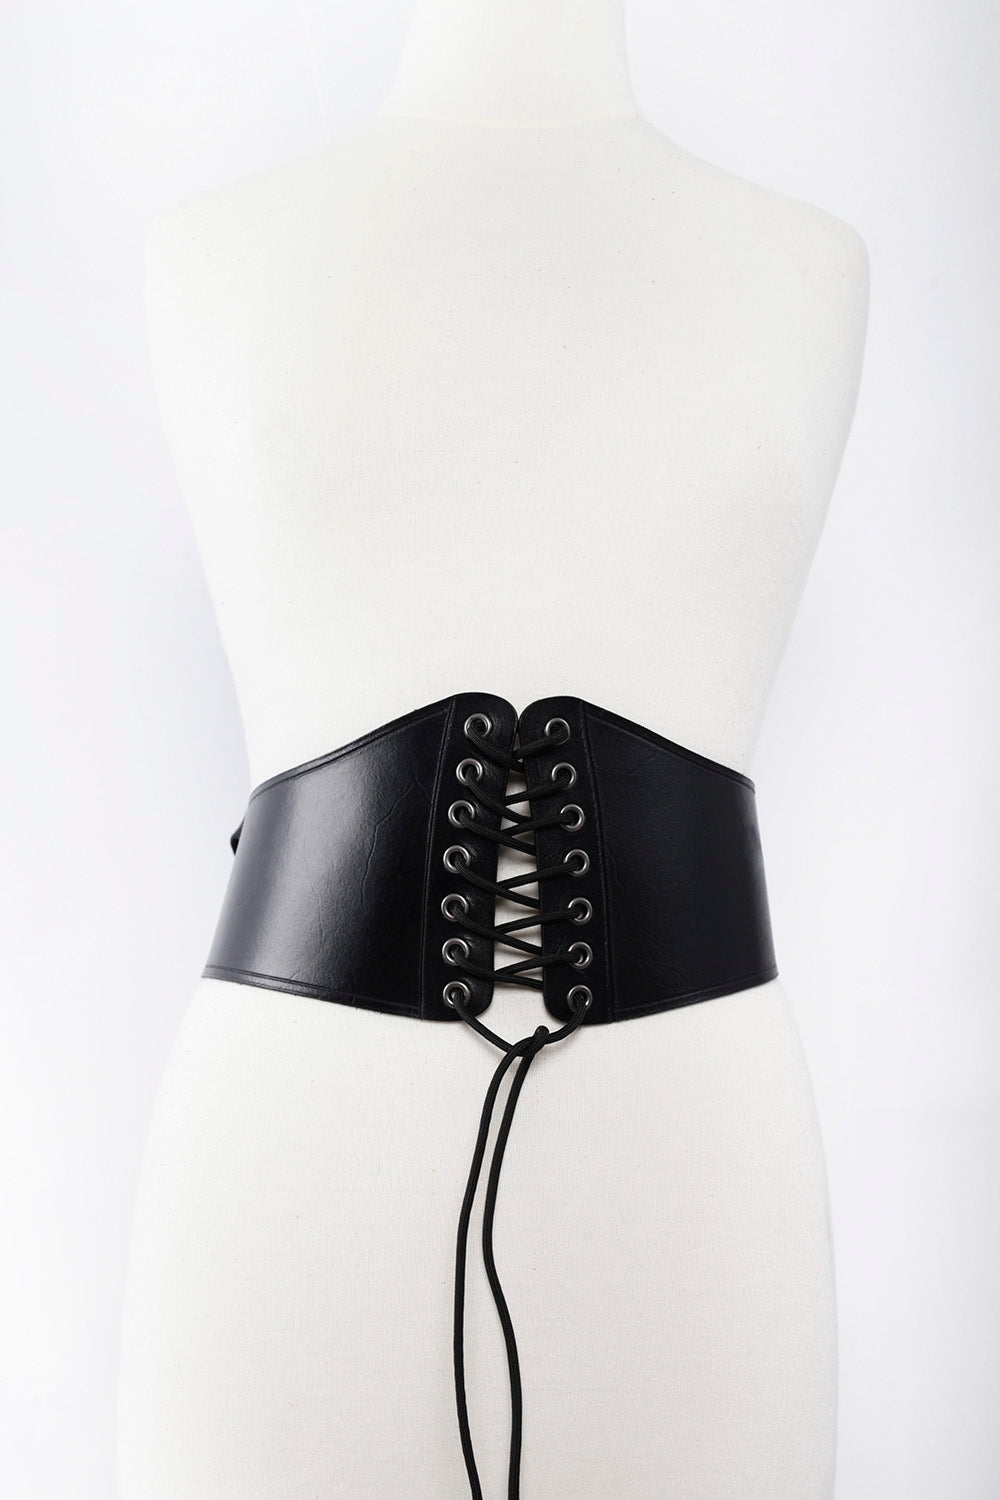 Black Leather Corset Waist Belt on Women Jacket and Dress, Adjustable Leather  Corset Over Dress -  Ireland